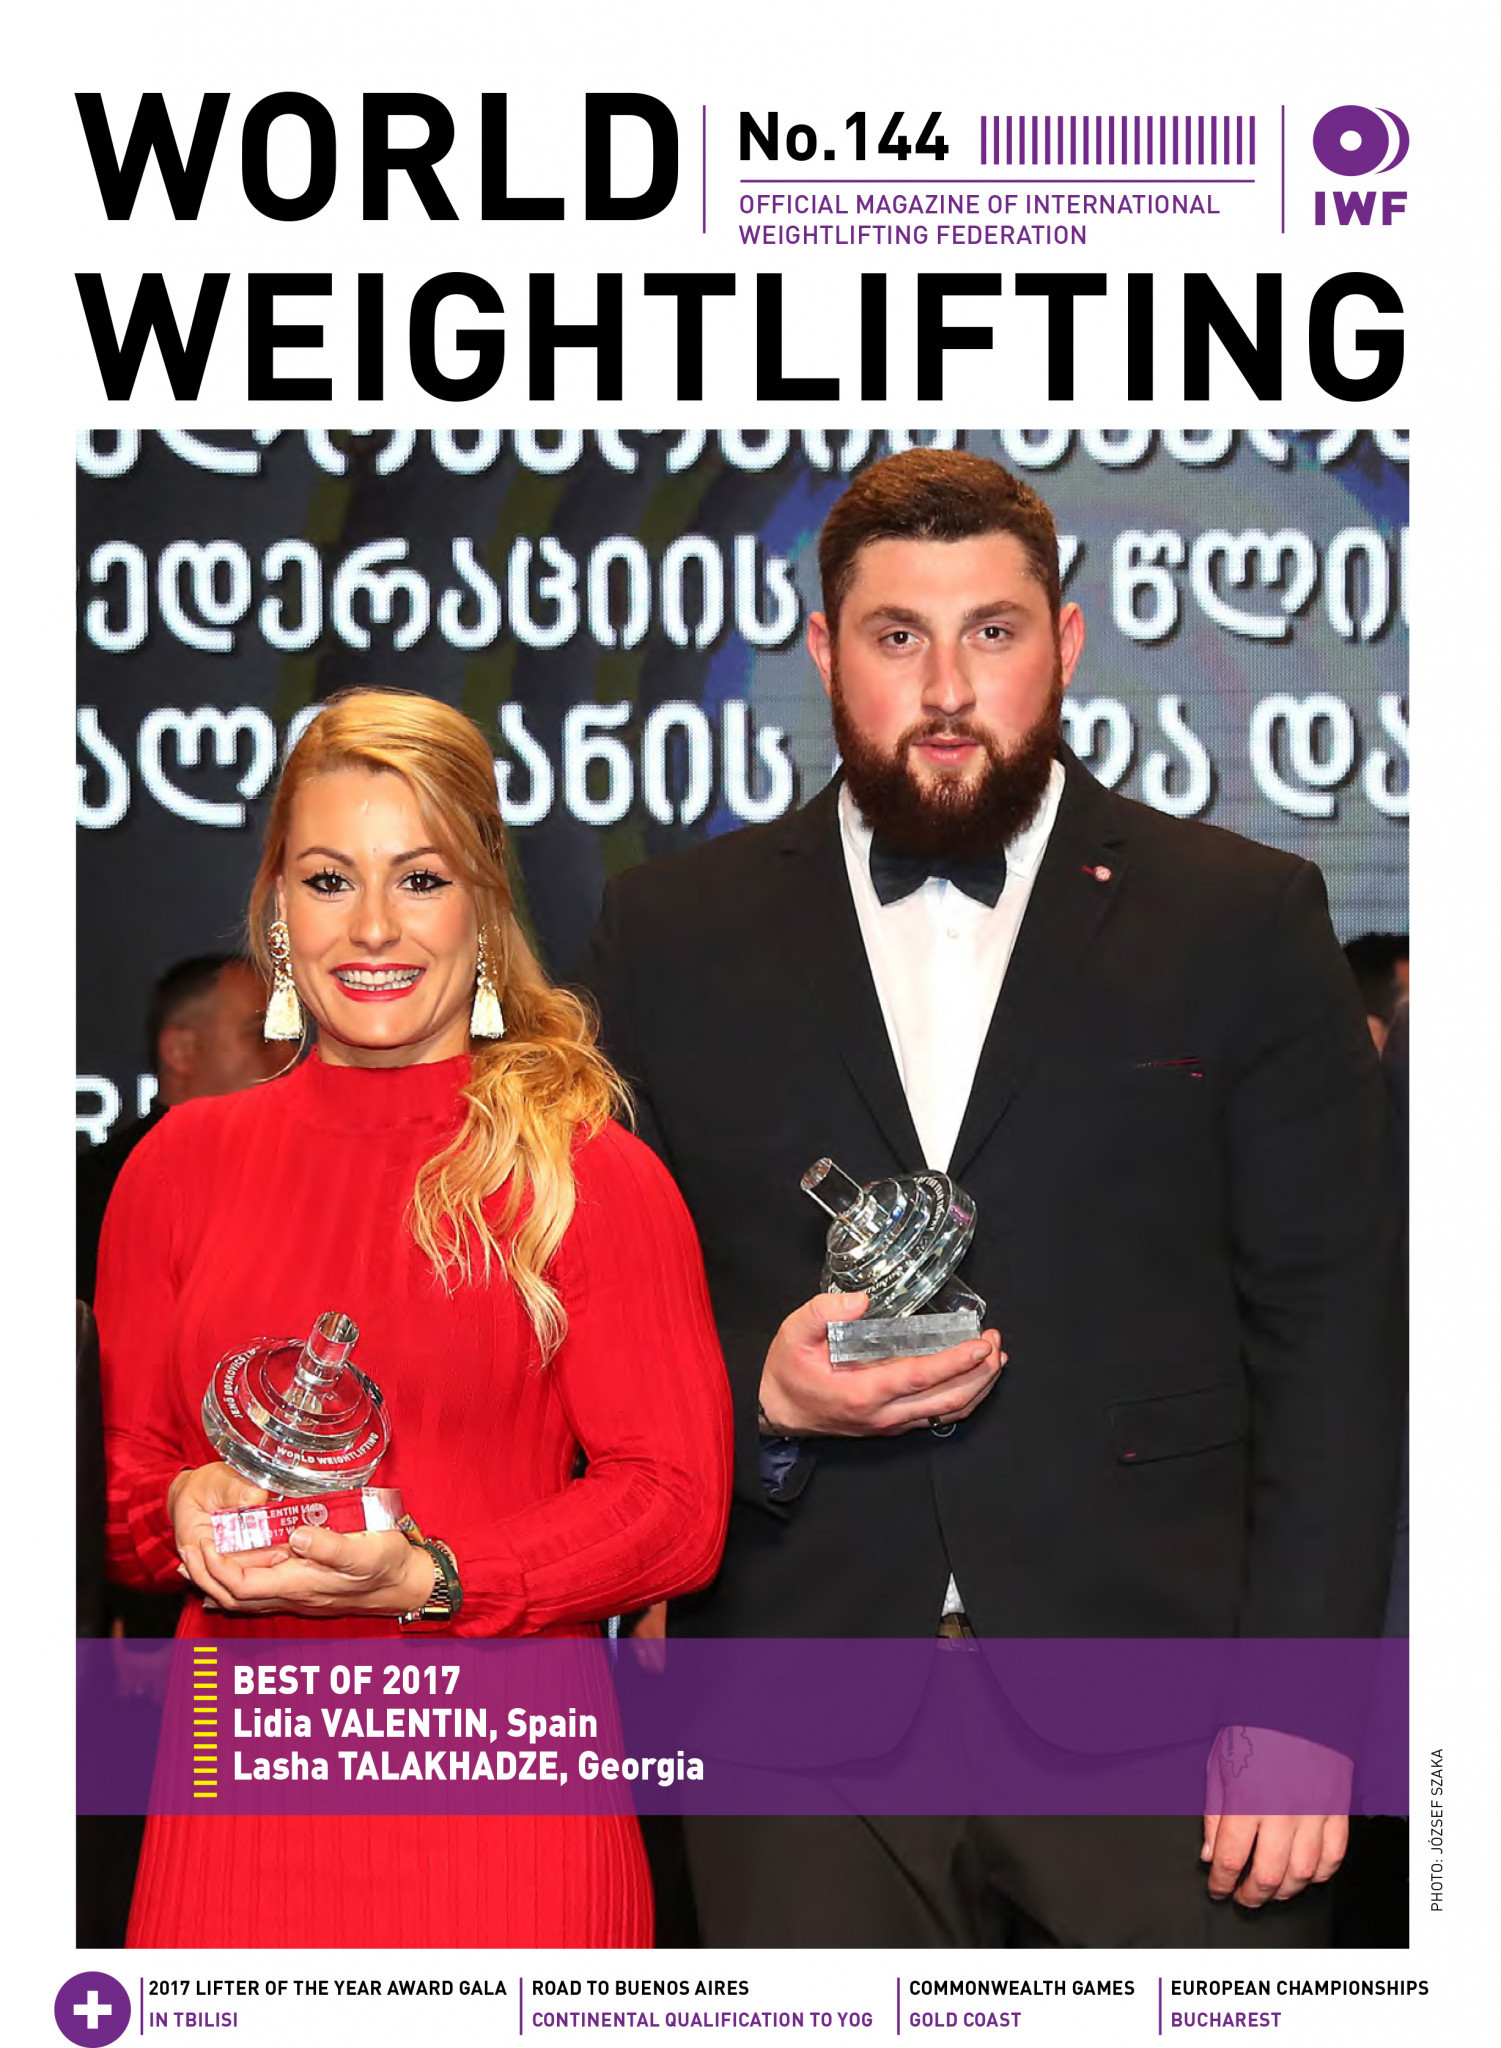 World Weightlifting Magazine No. 144